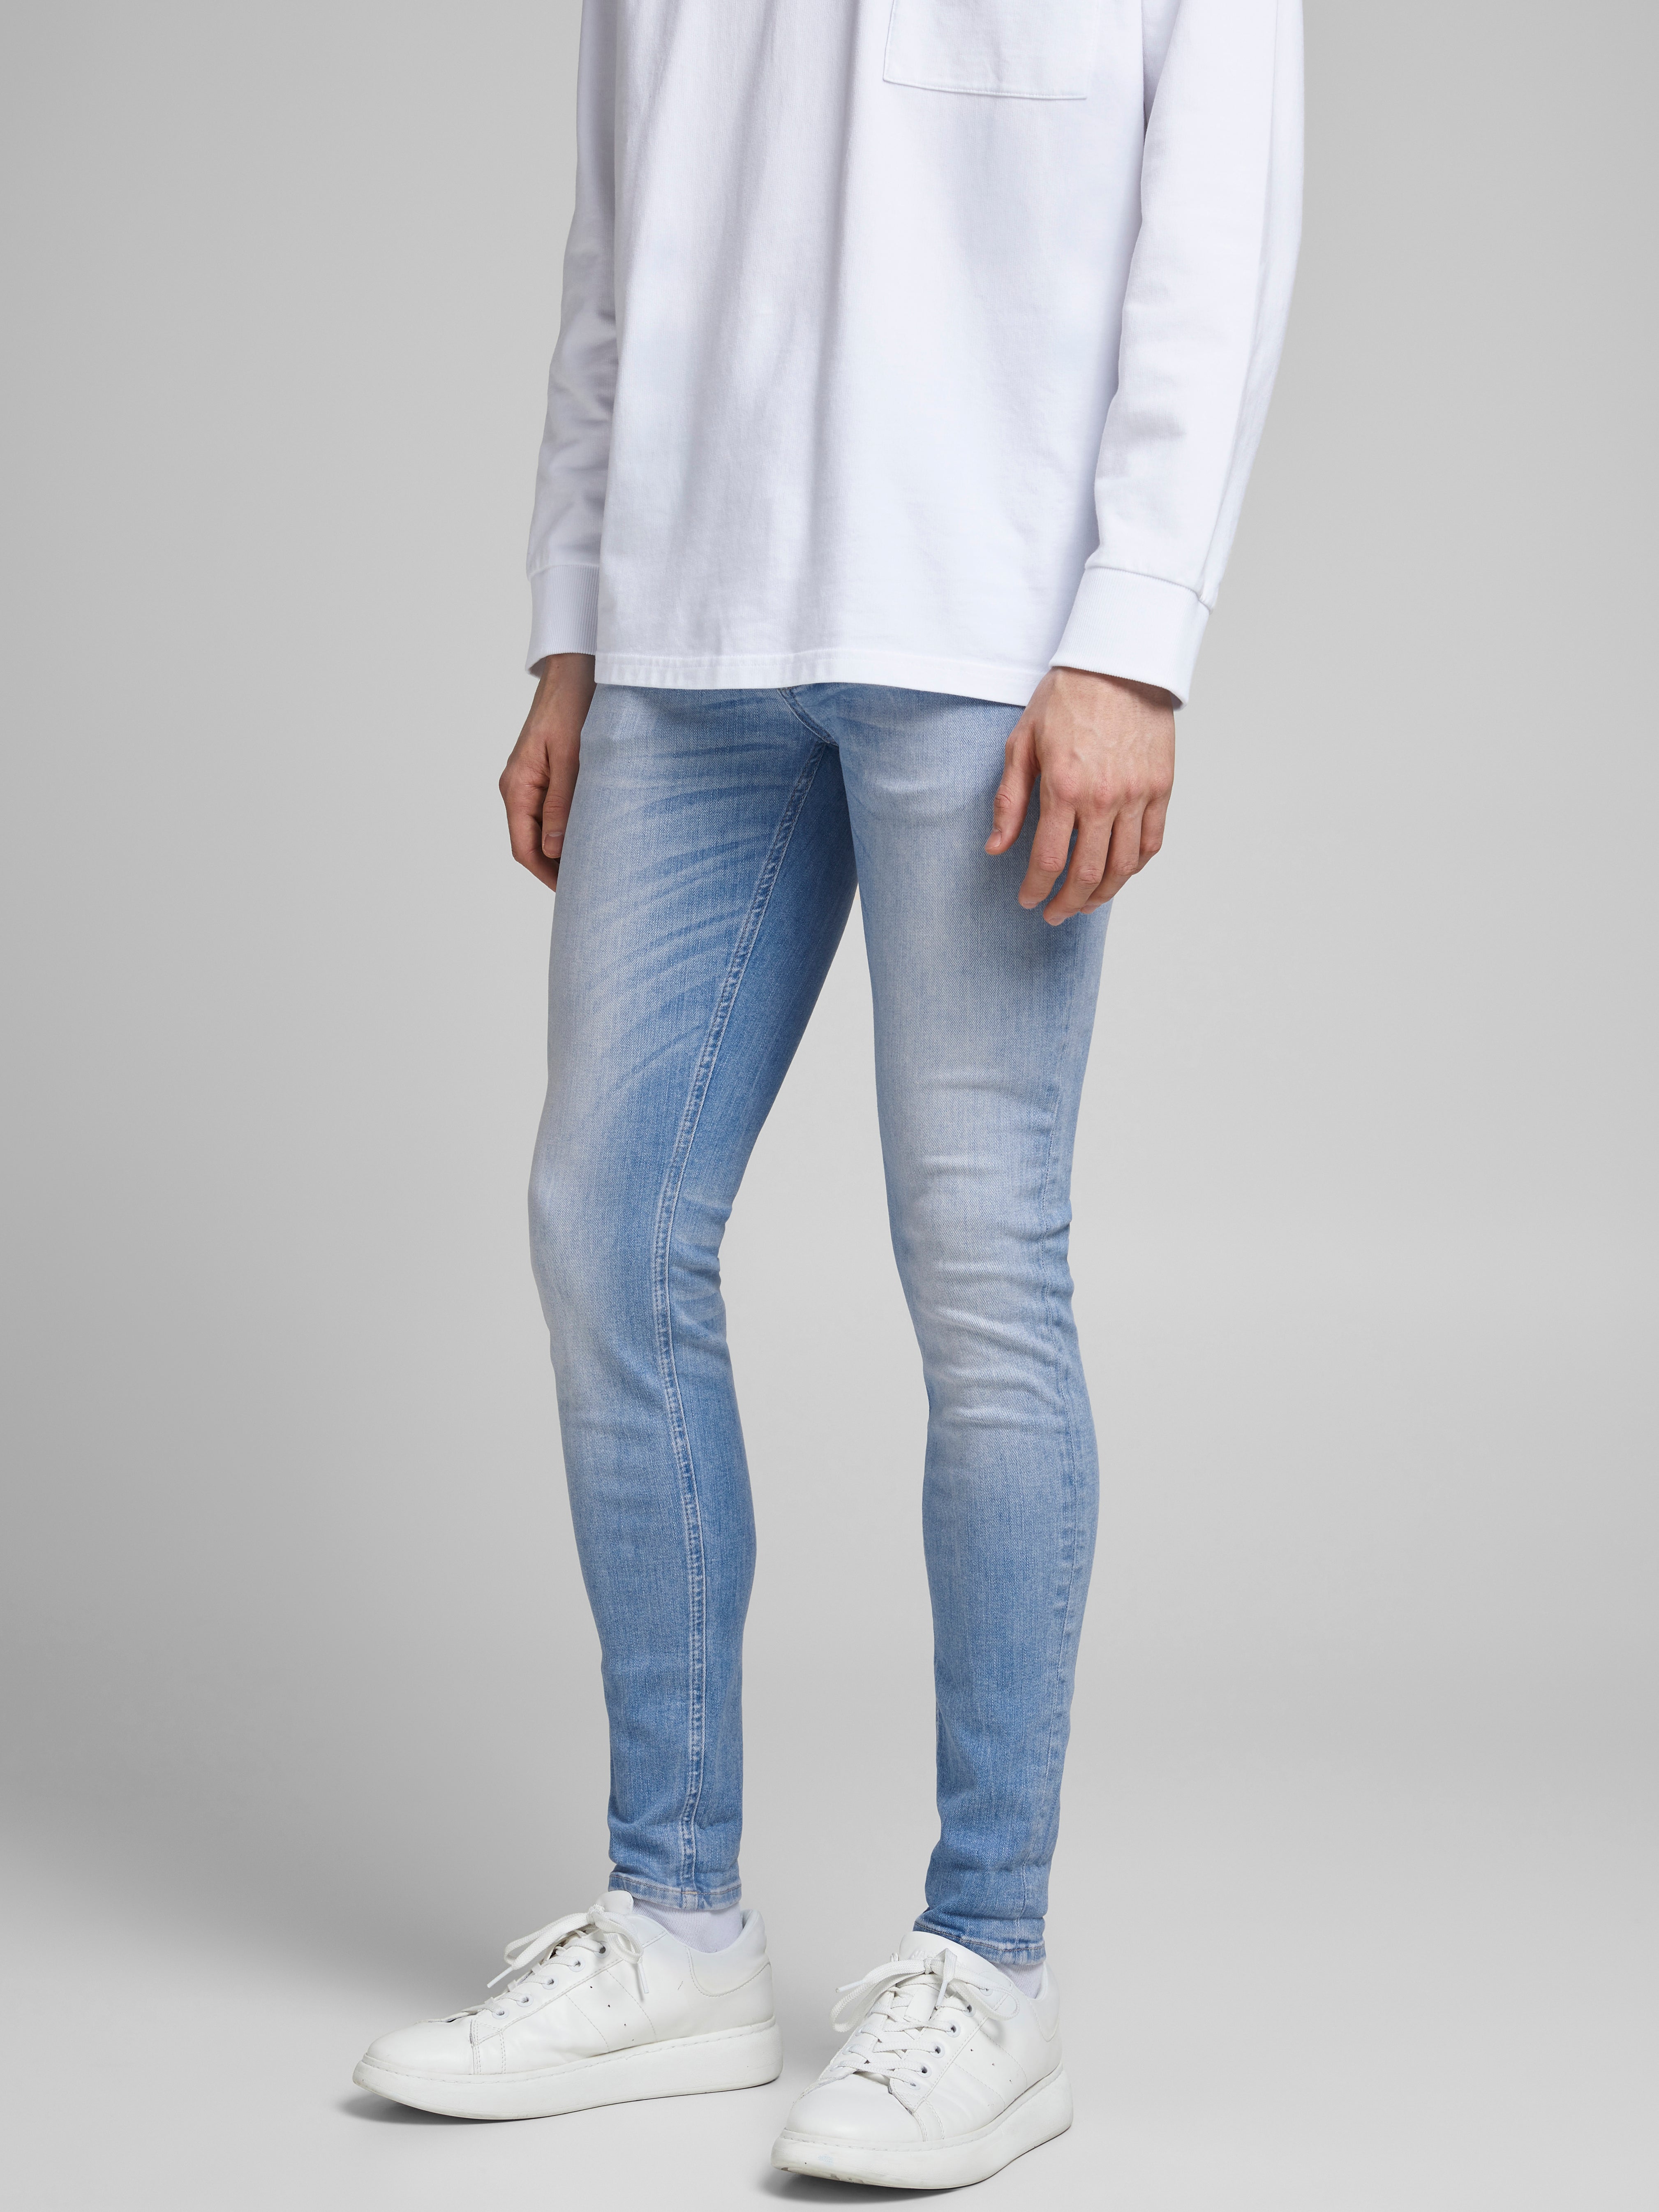 discount 57% Jack & Jones shorts jeans Gray XXL MEN FASHION Jeans Basic 